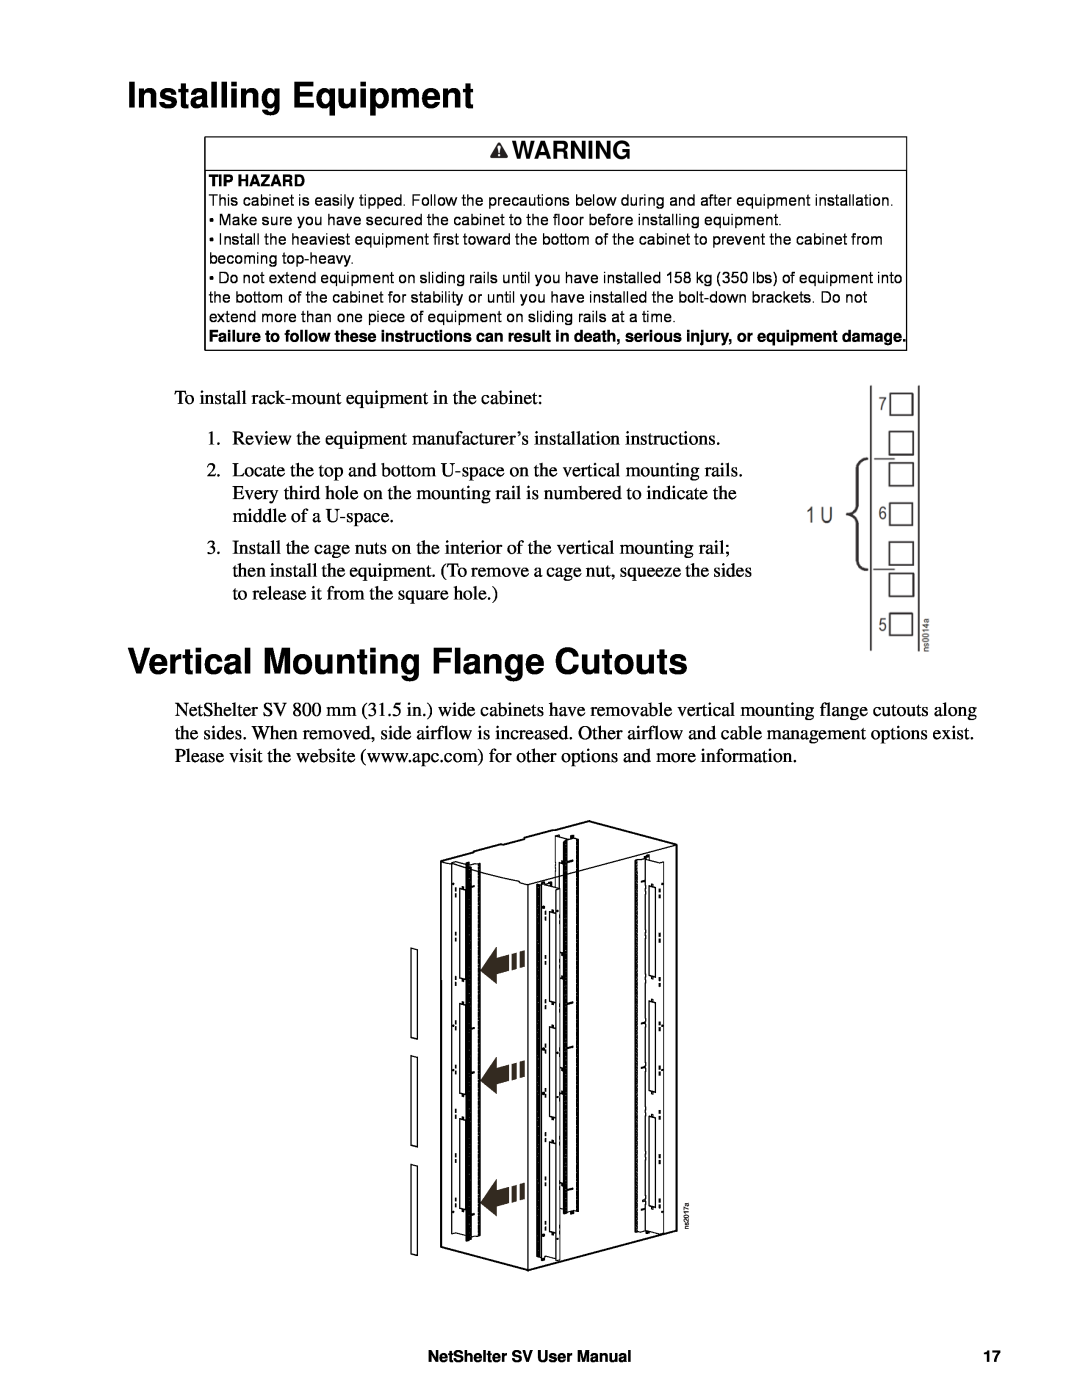 APC AR2400 user manual Installing Equipment, Vertical Mounting Flange Cutouts 